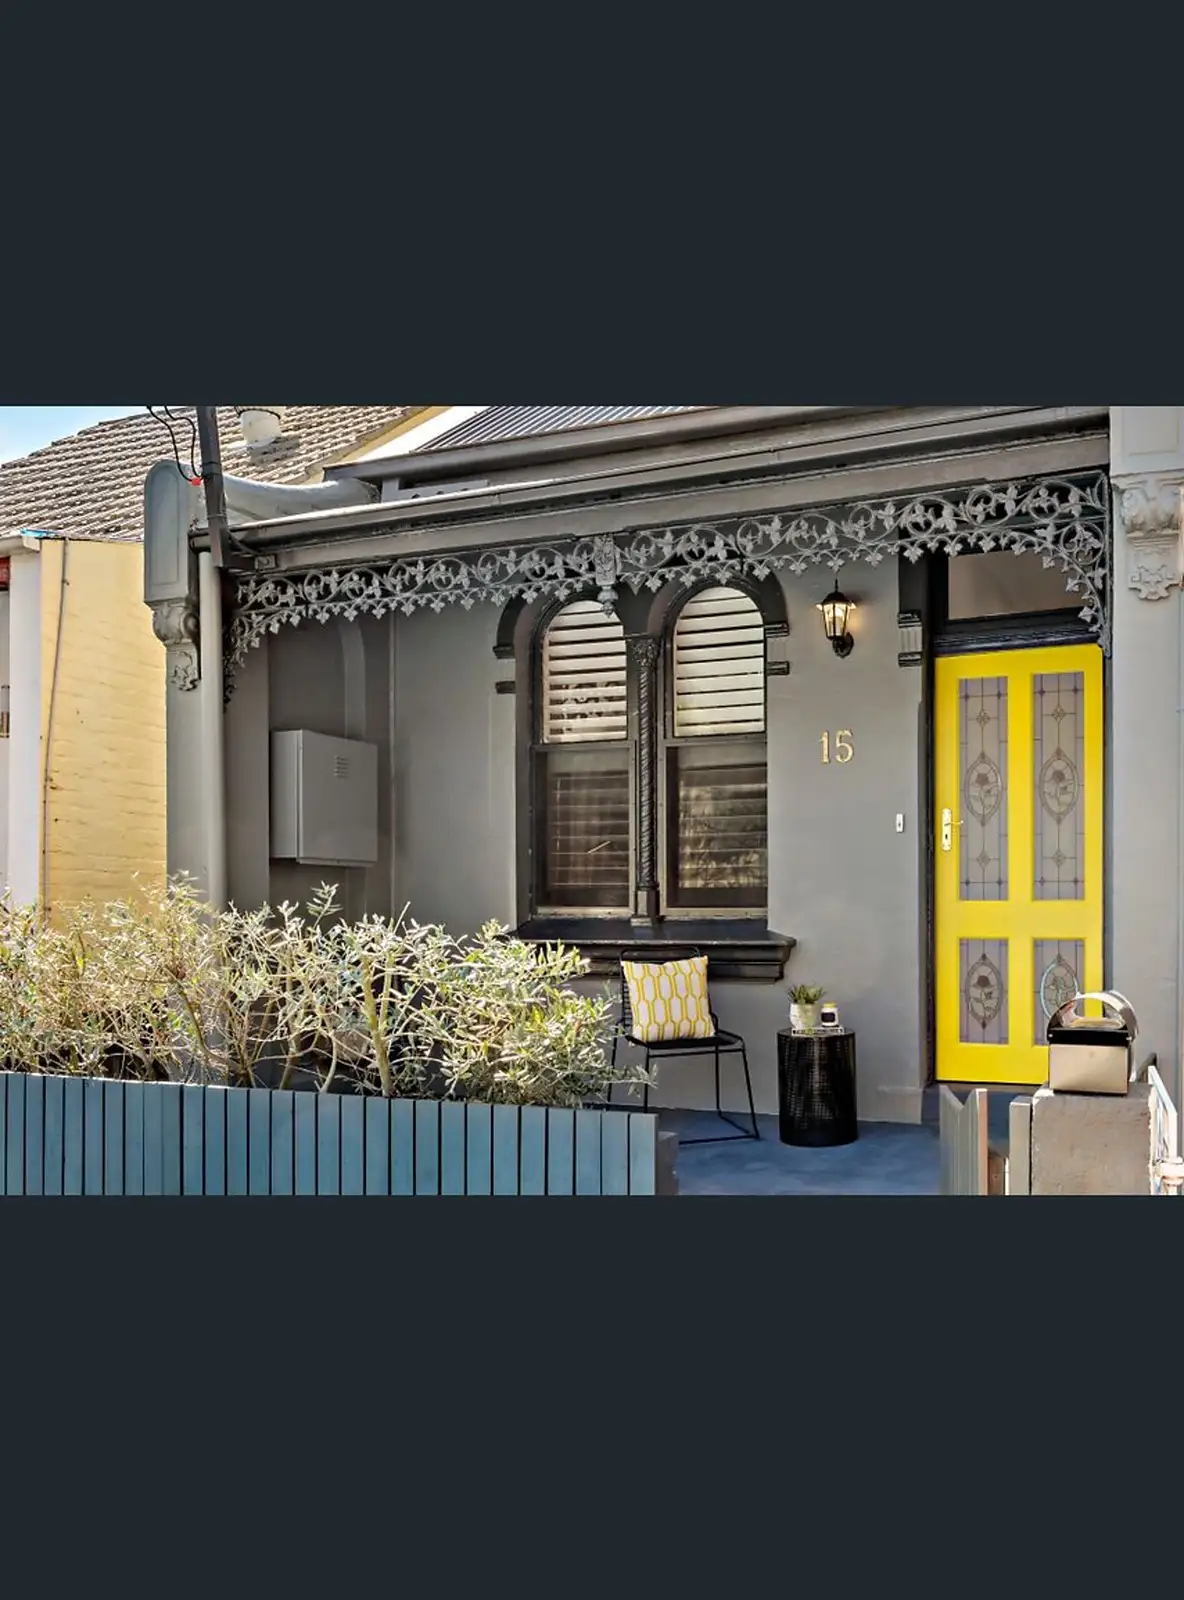 15 Avon Street, Glebe Sold by Sydney Sotheby's International Realty - image 1